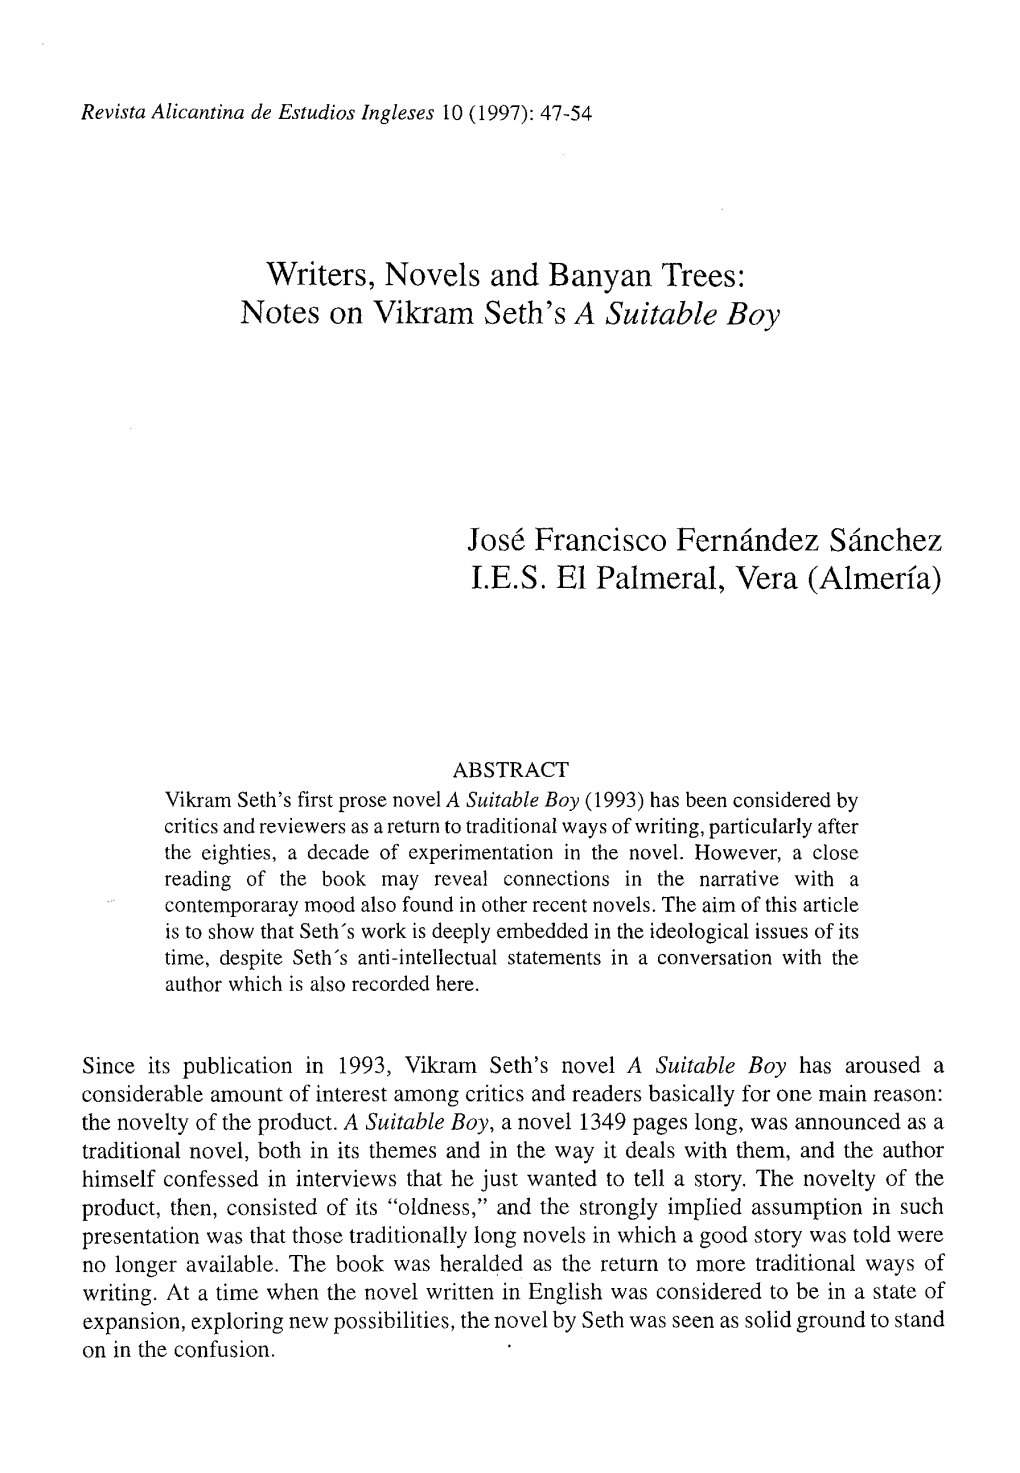 Writers, Novéis and Banyan Trees: Notes on Vikram Seth's a Suitable Boy José Francisco Fernández Sánchez I.E.S. El Palmeral